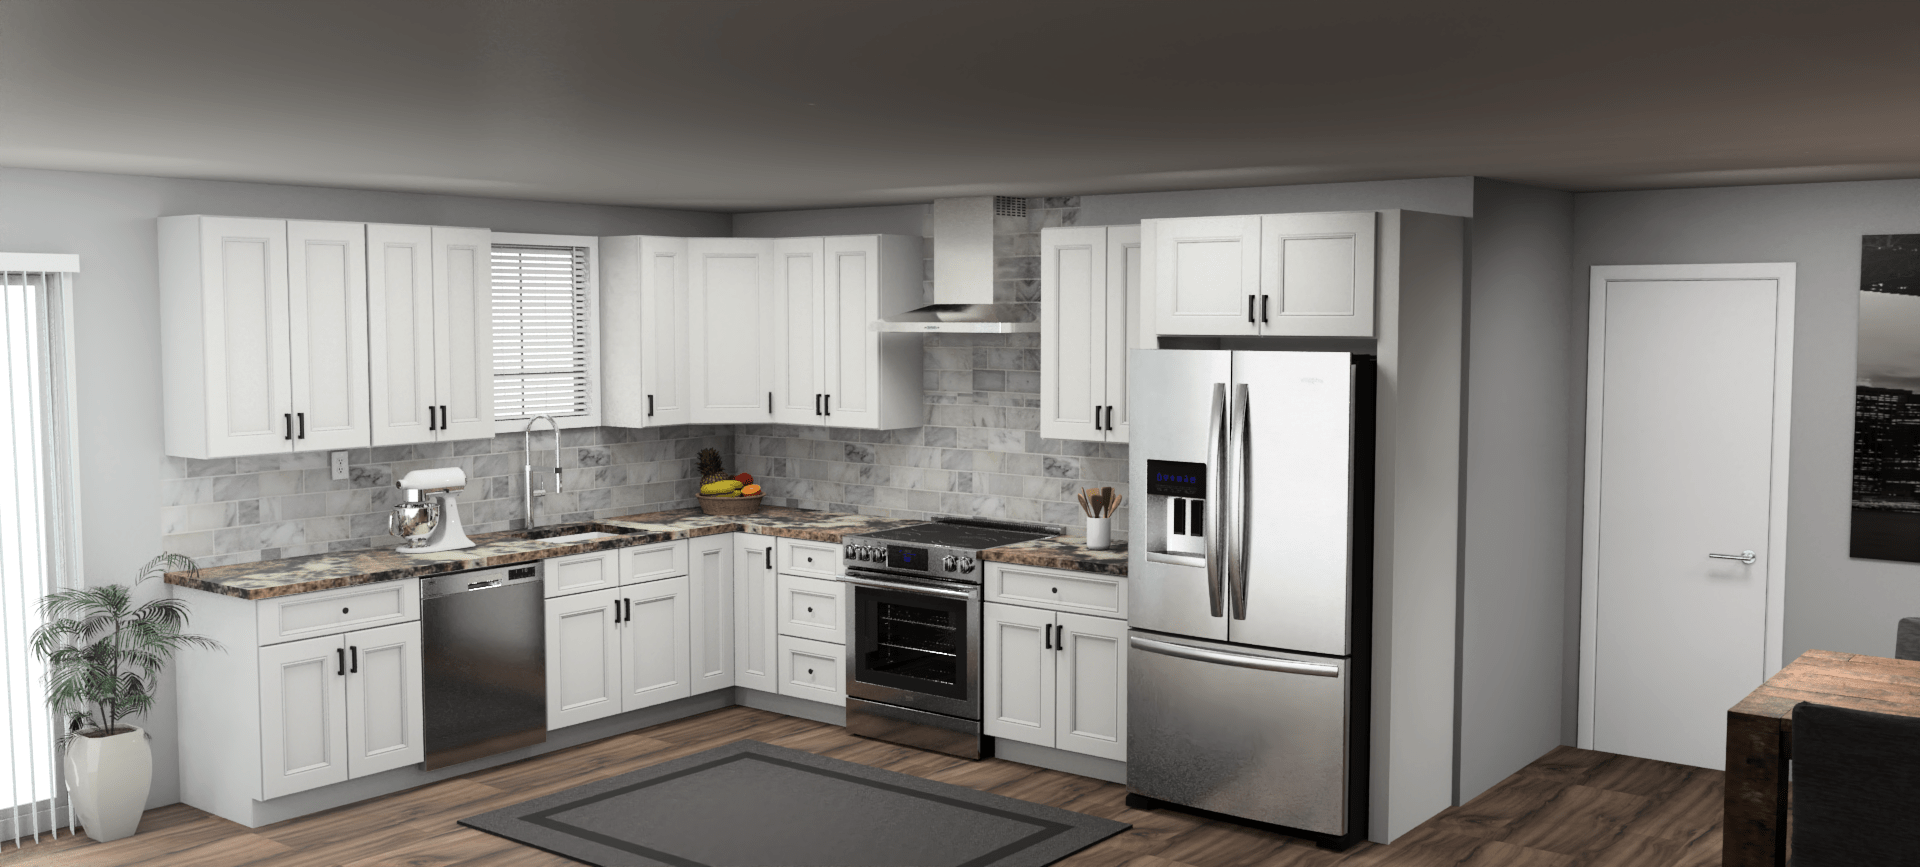 Fabuwood Allure Nexus Frost 10 x 13 L Shaped Kitchen Main Layout Photo